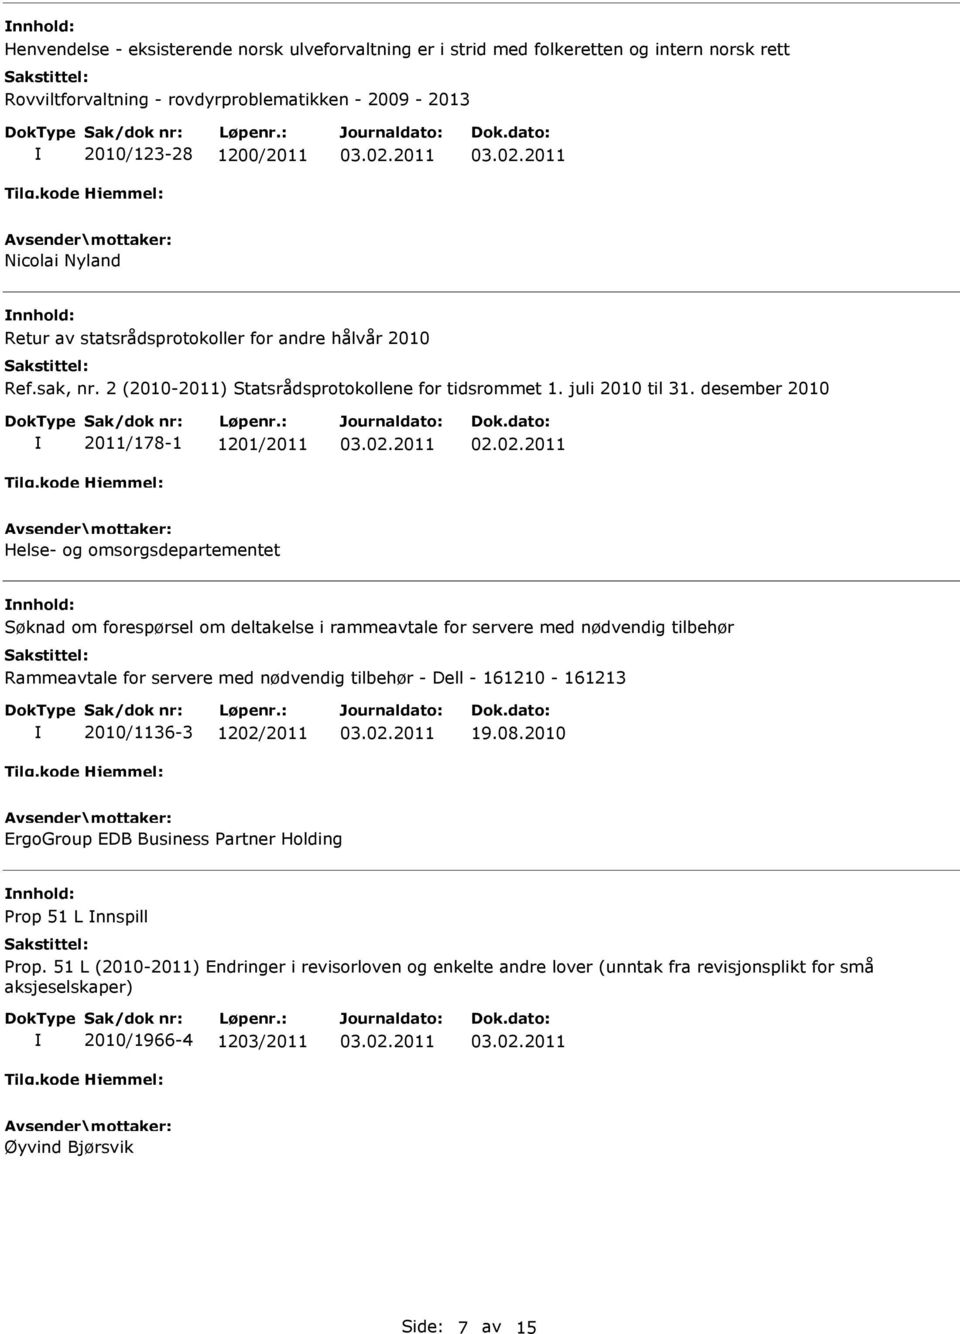 desember 2010 2011/178-1 1201/2011 Helse- og omsorgsdepartementet Søknad om forespørsel om deltakelse i rammeavtale for servere med nødvendig tilbehør 2010/1136-3 1202/2011 19.08.